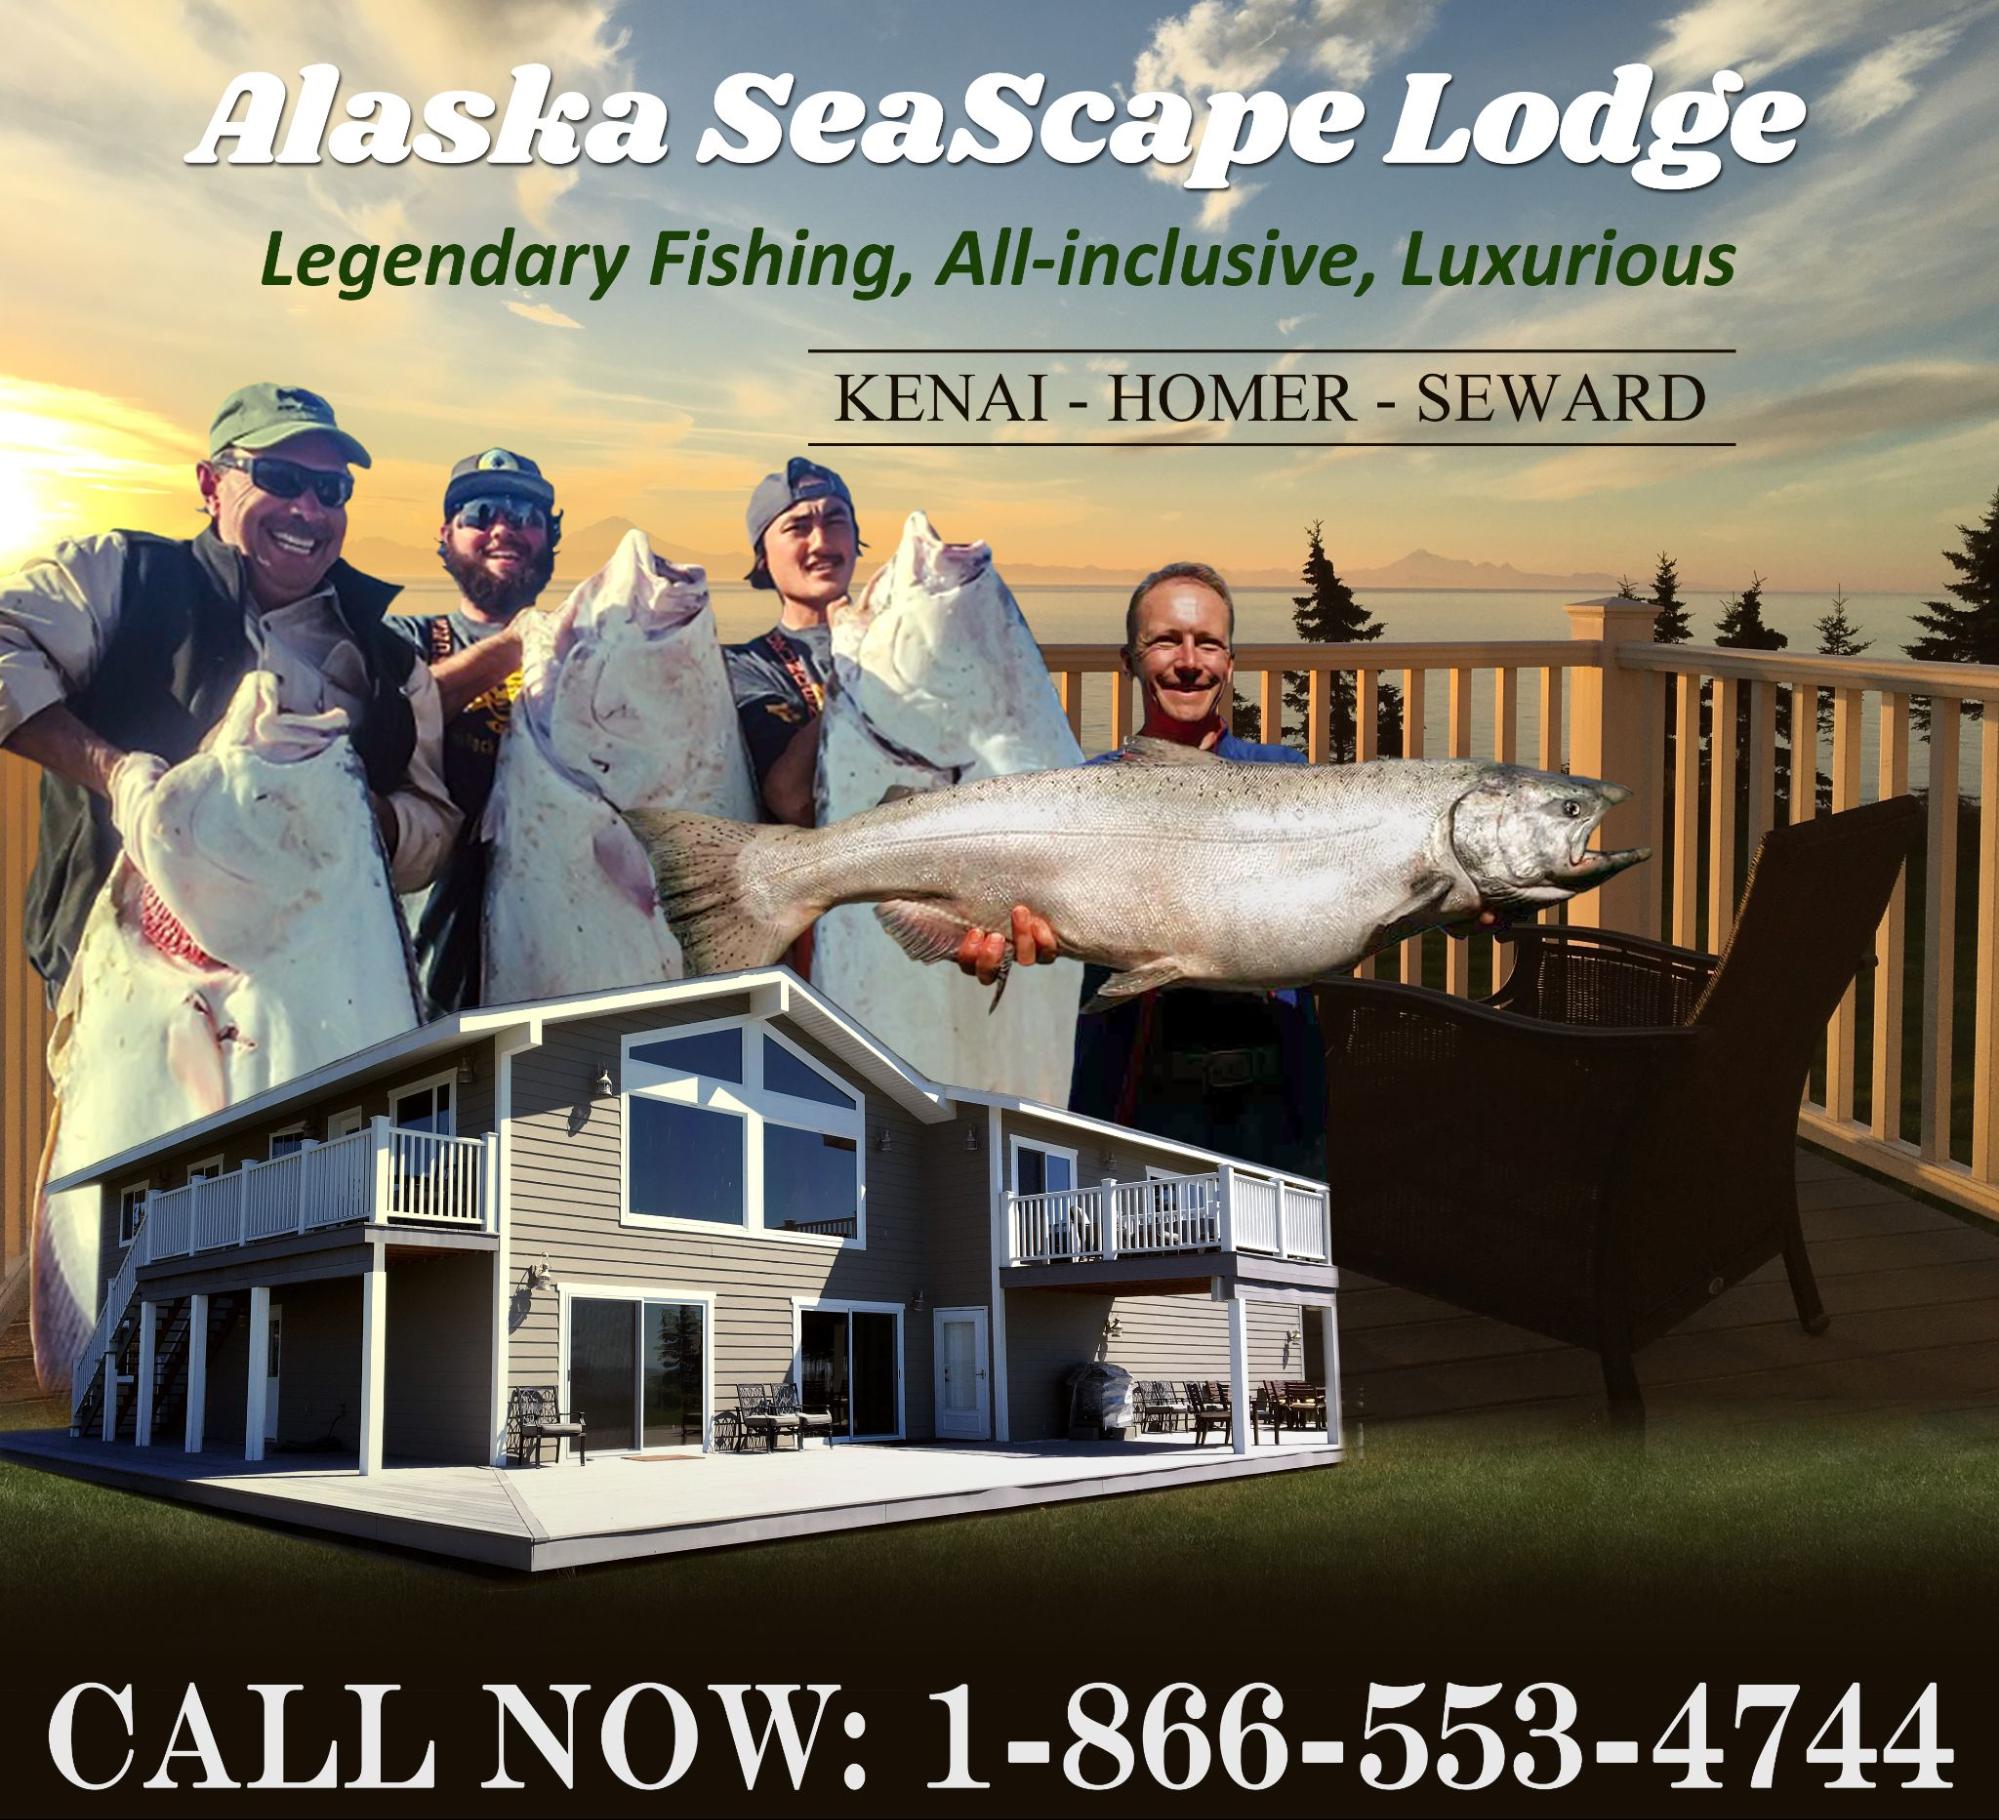 Fishing Vacation Packages: Alaska Seascape Lodge on the Kenai Peninsula.